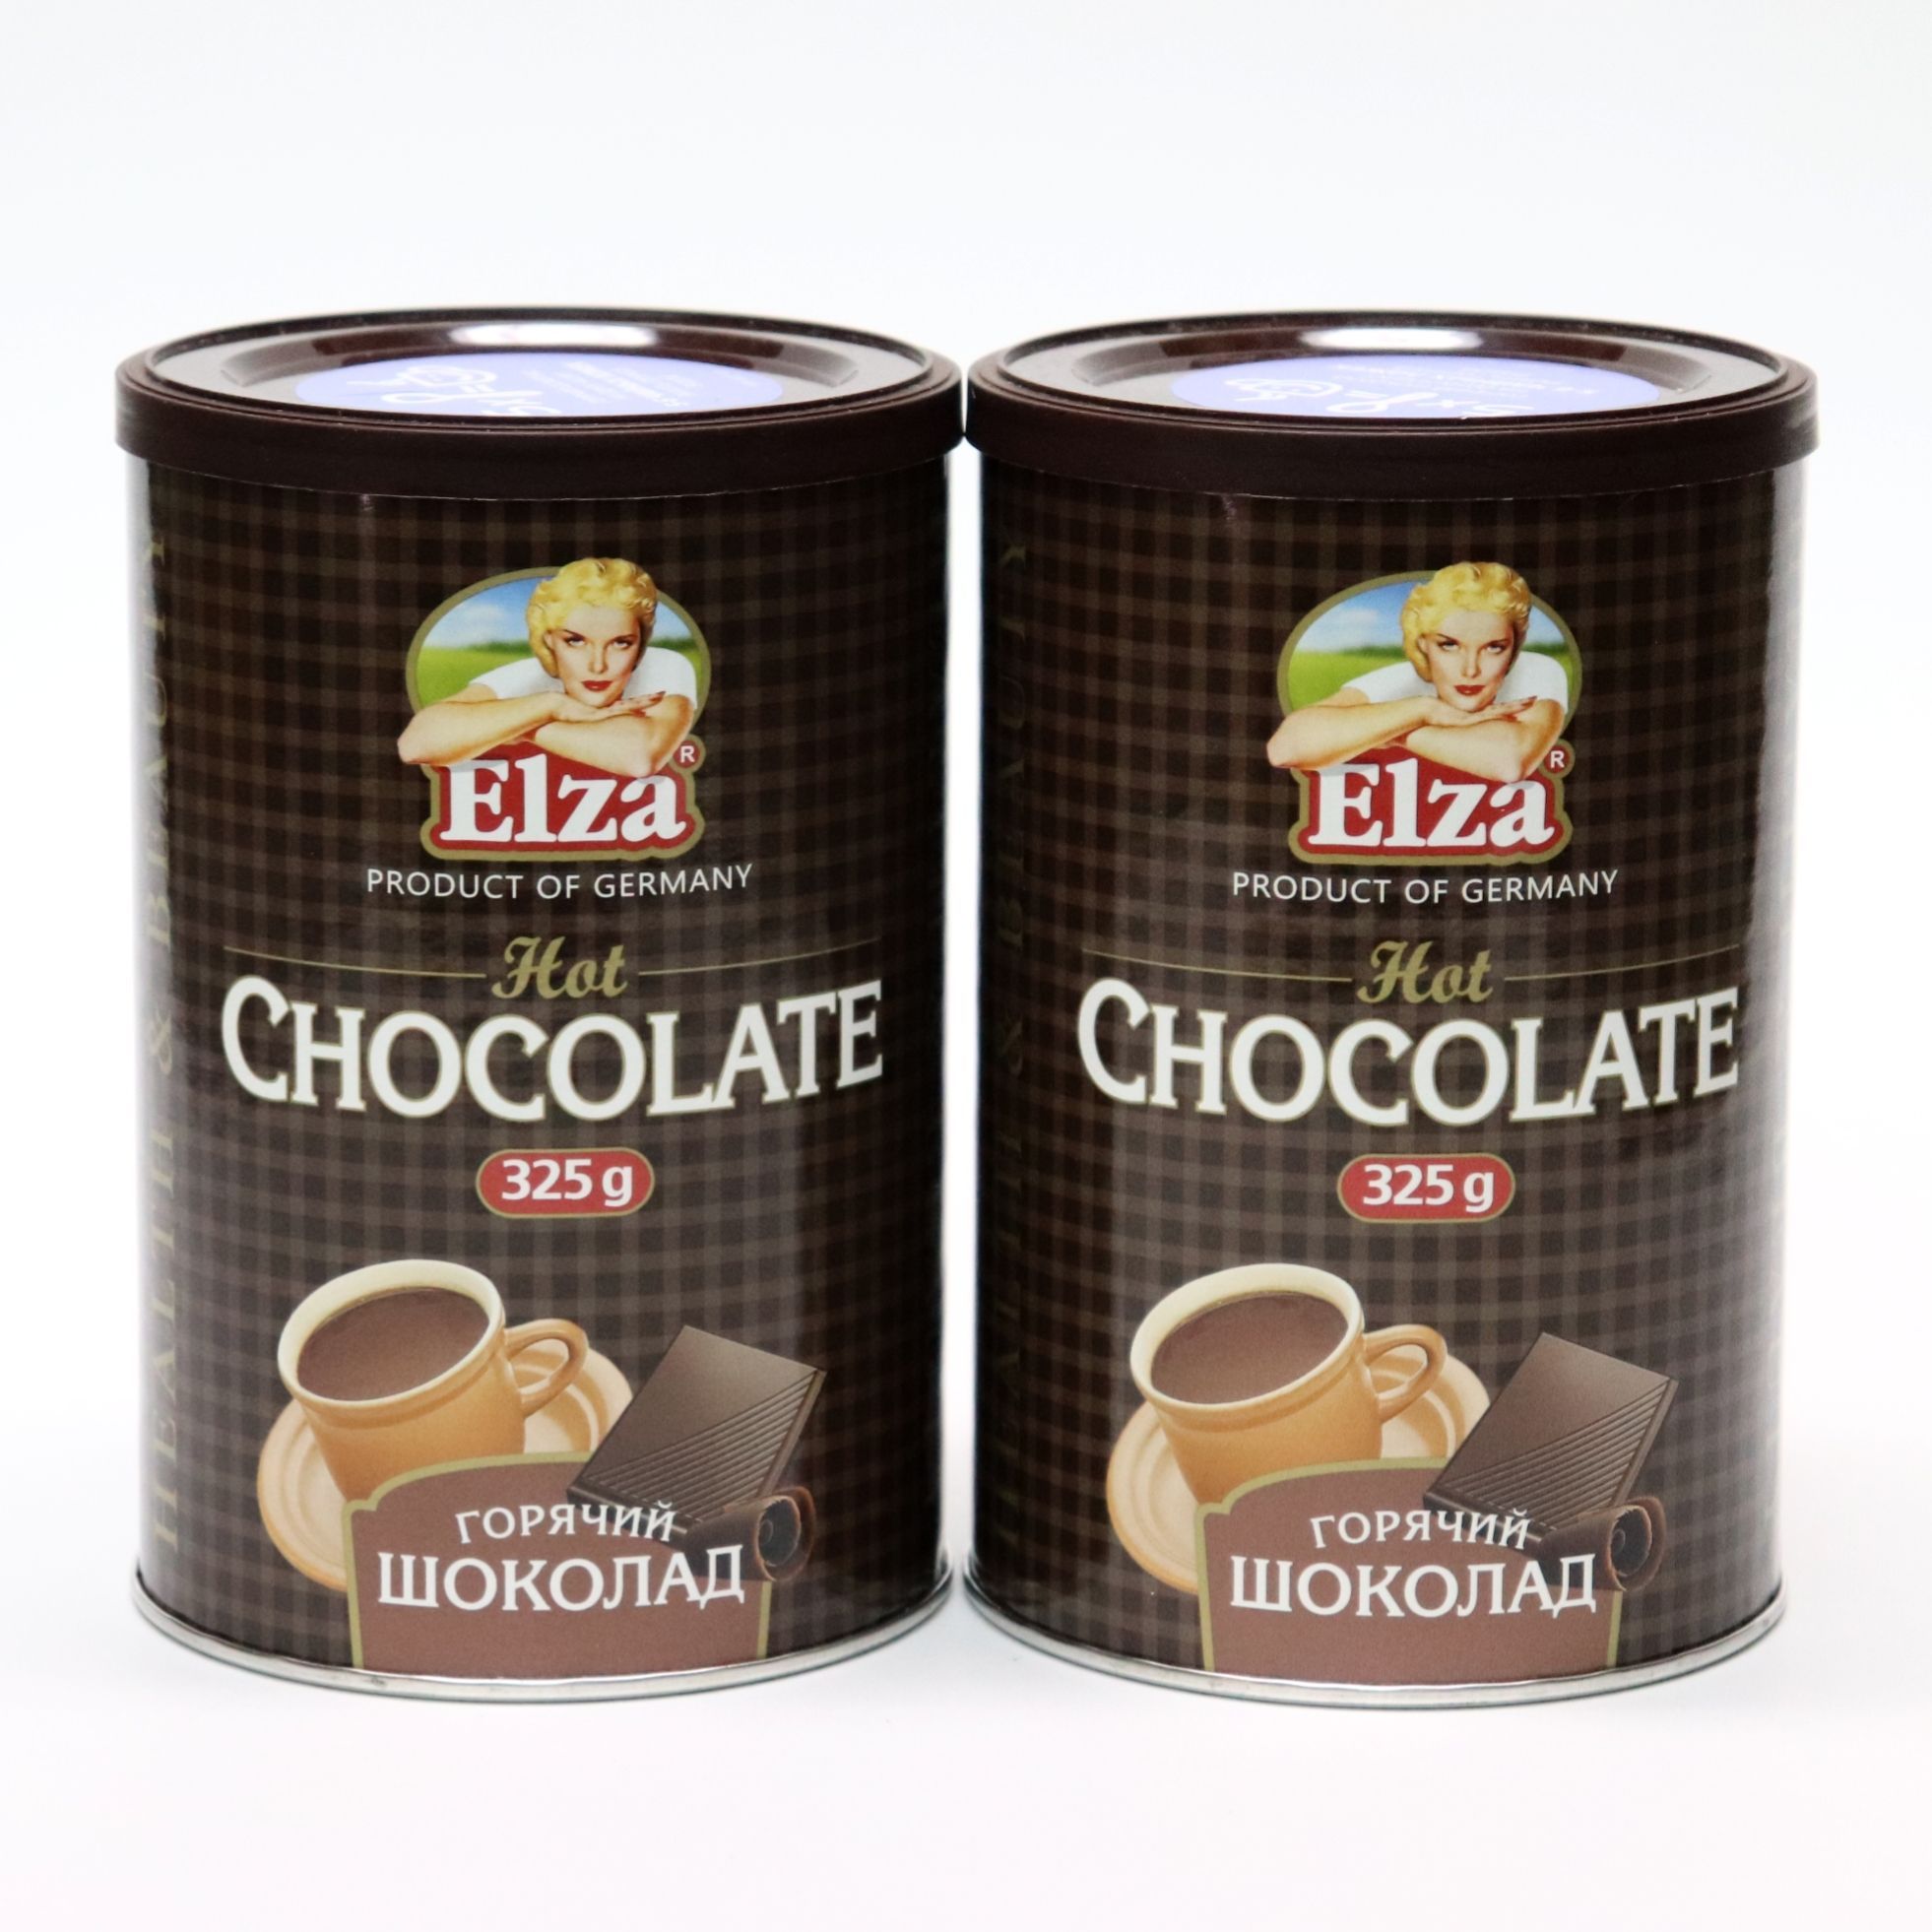 Горячий шоколад Elza, 325 гр. Горячий шоколад Elza горячий шоколад растворимый, 325 г, Германия. Горячий шоколад растворимый Elza Choco Band.